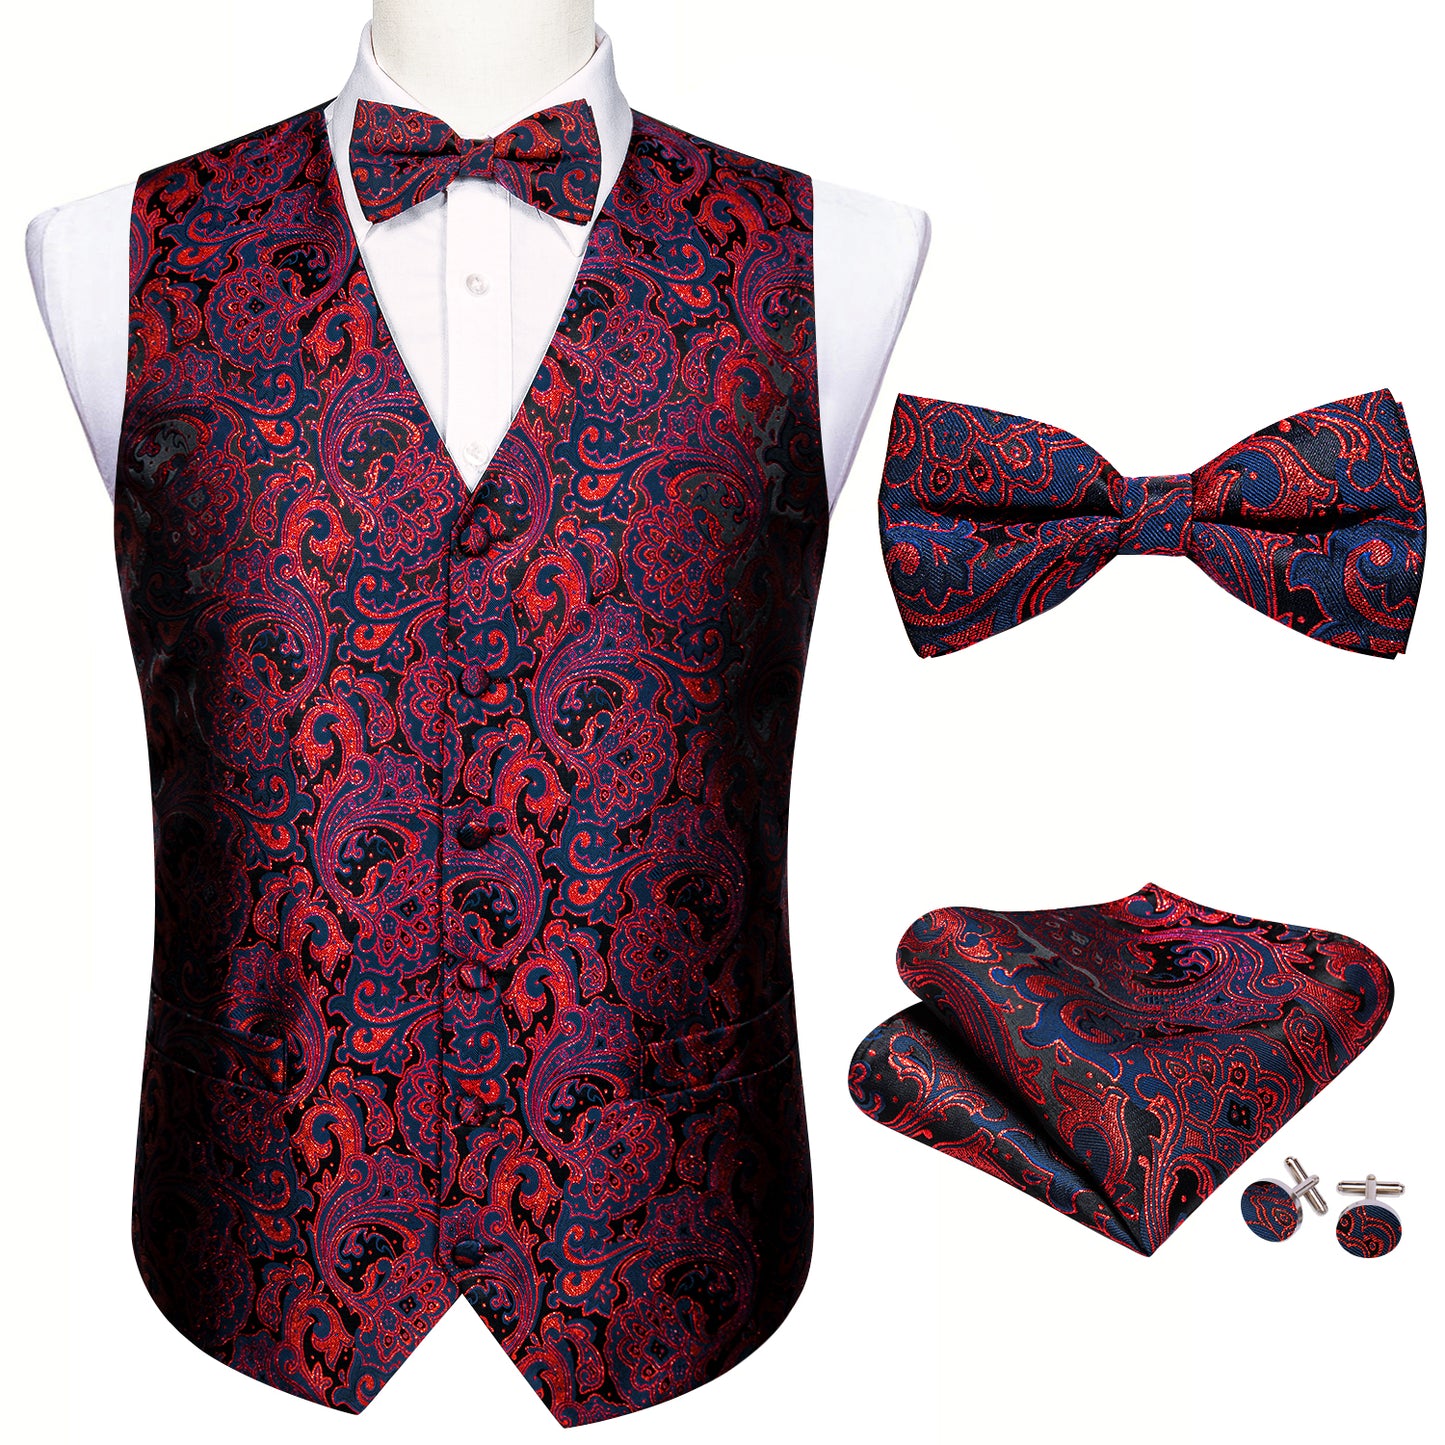 Designer Waistcoat Novelty Bowtie Vest Shiny French Fan Print Garnet Red